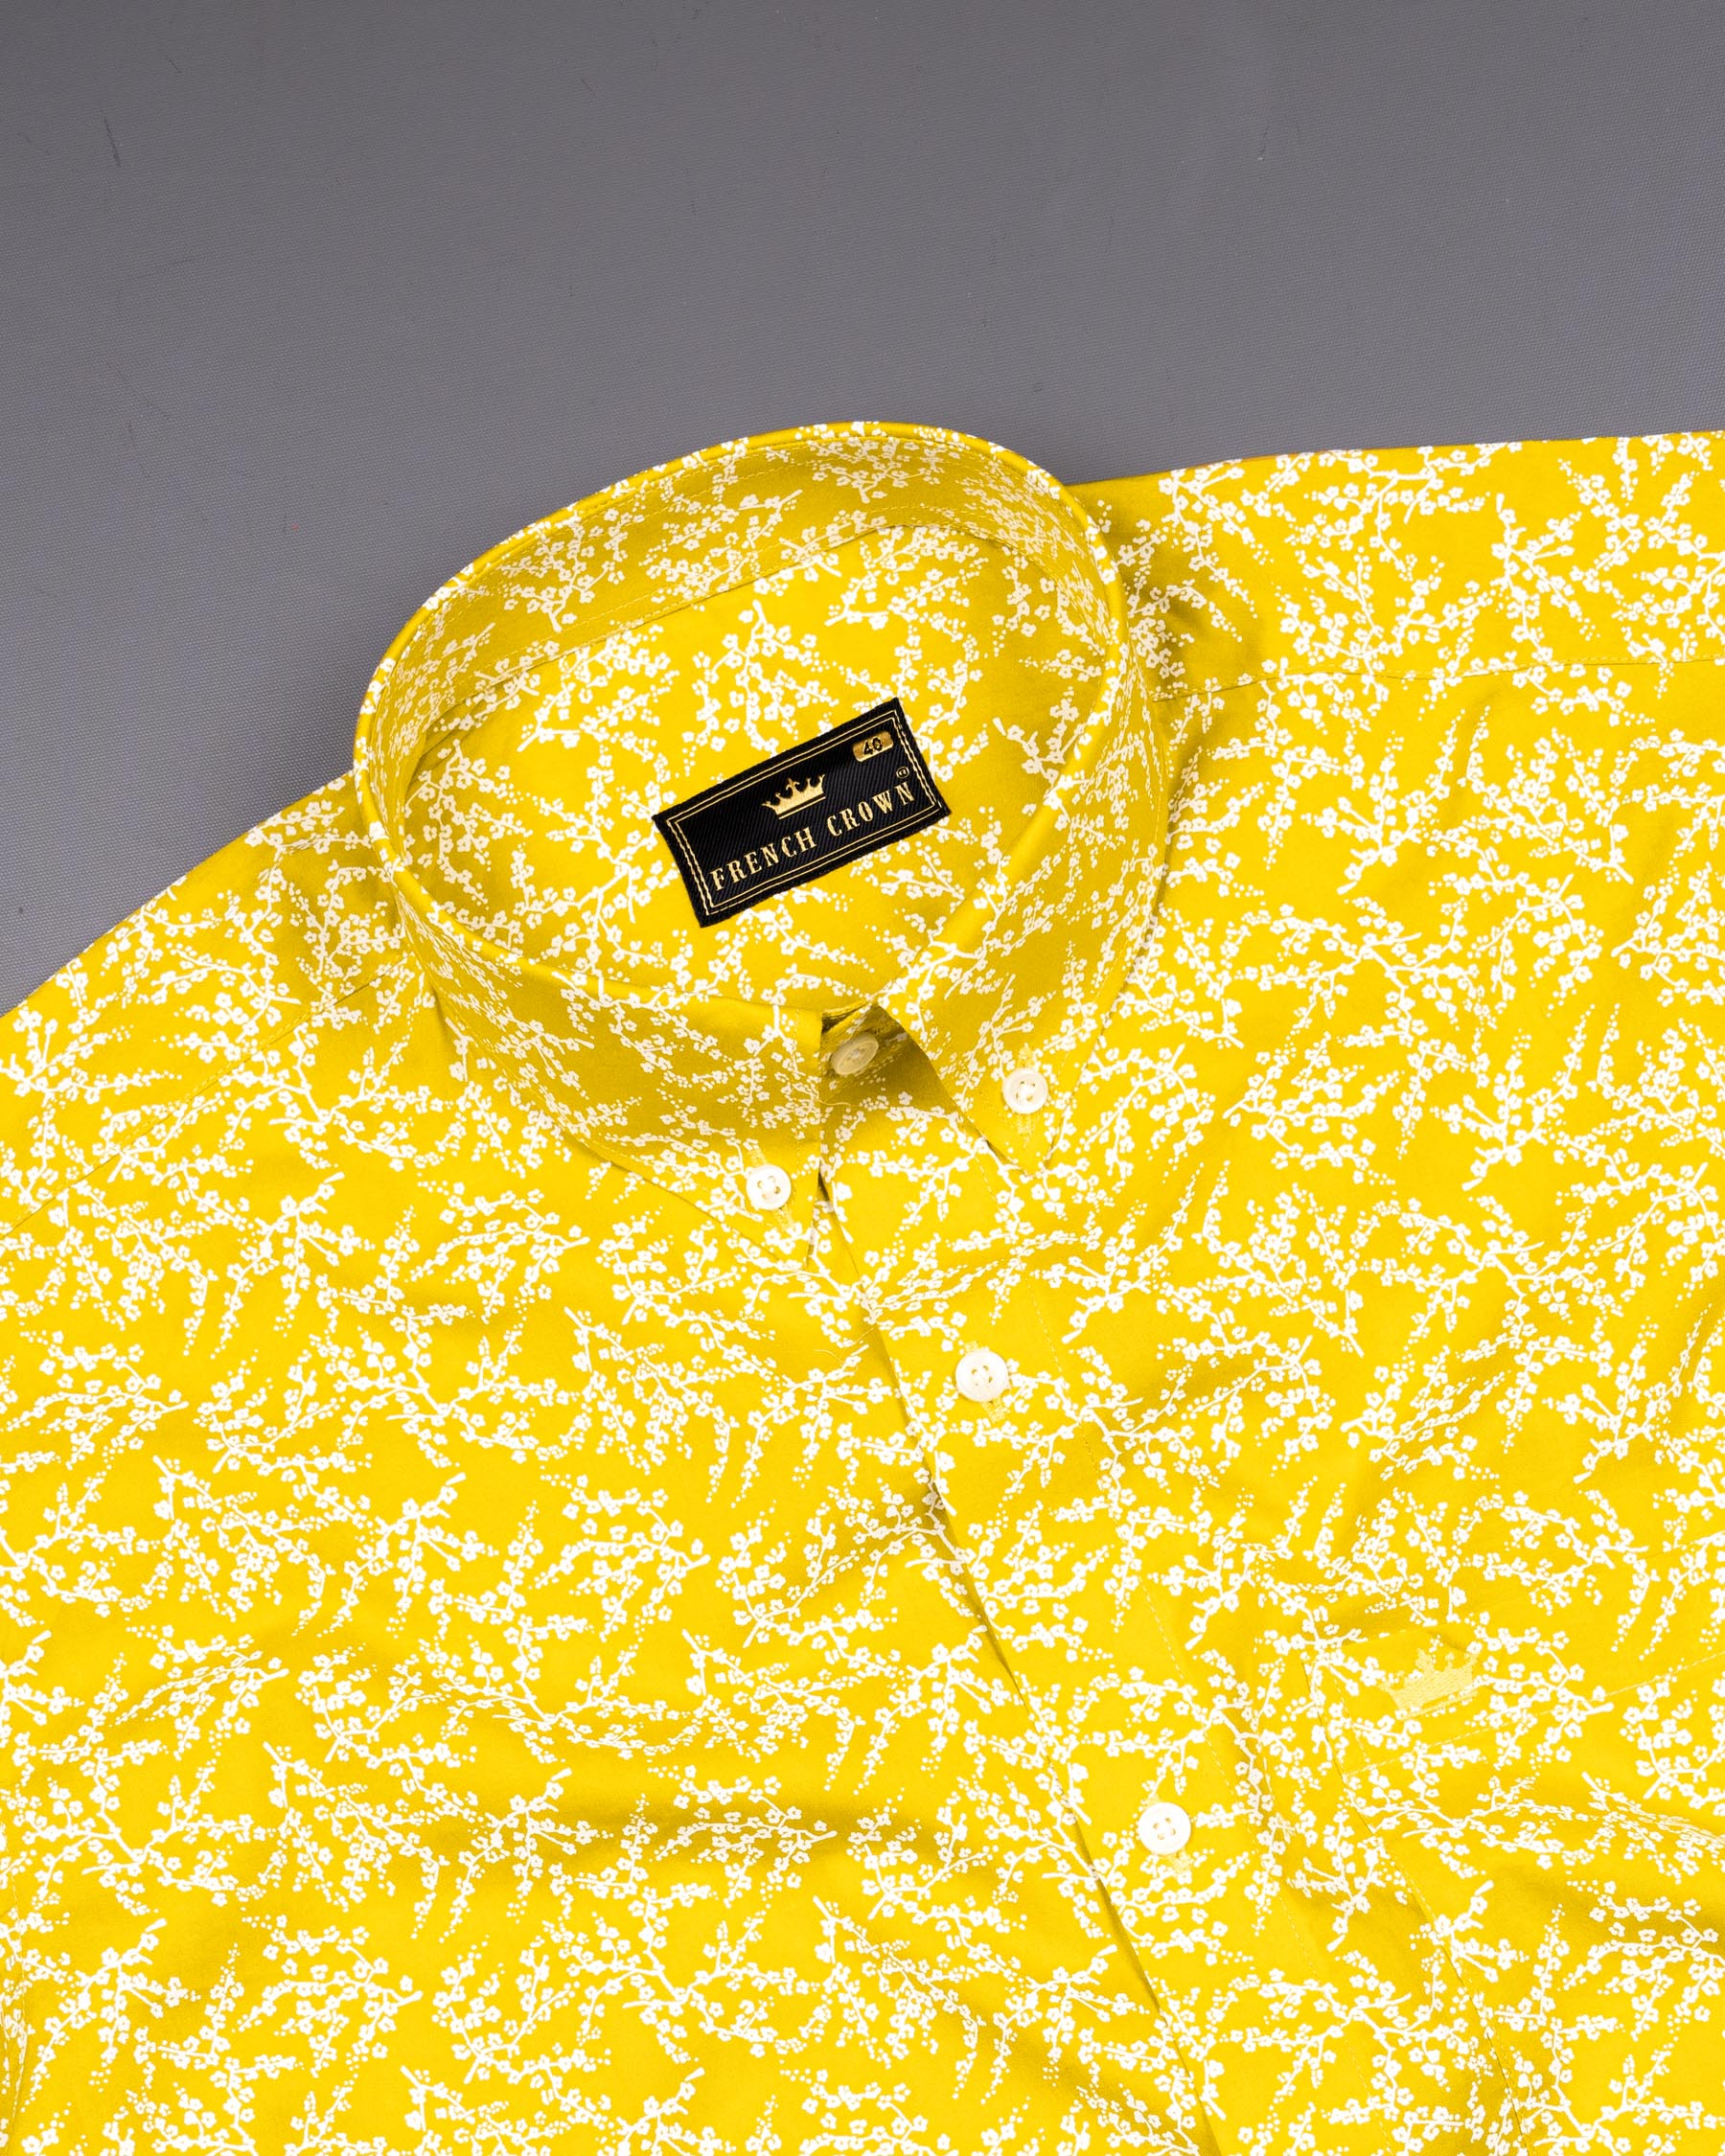 School Bus Yellow and White Flower Vine Printed Super Soft Premium Cotton Shirt